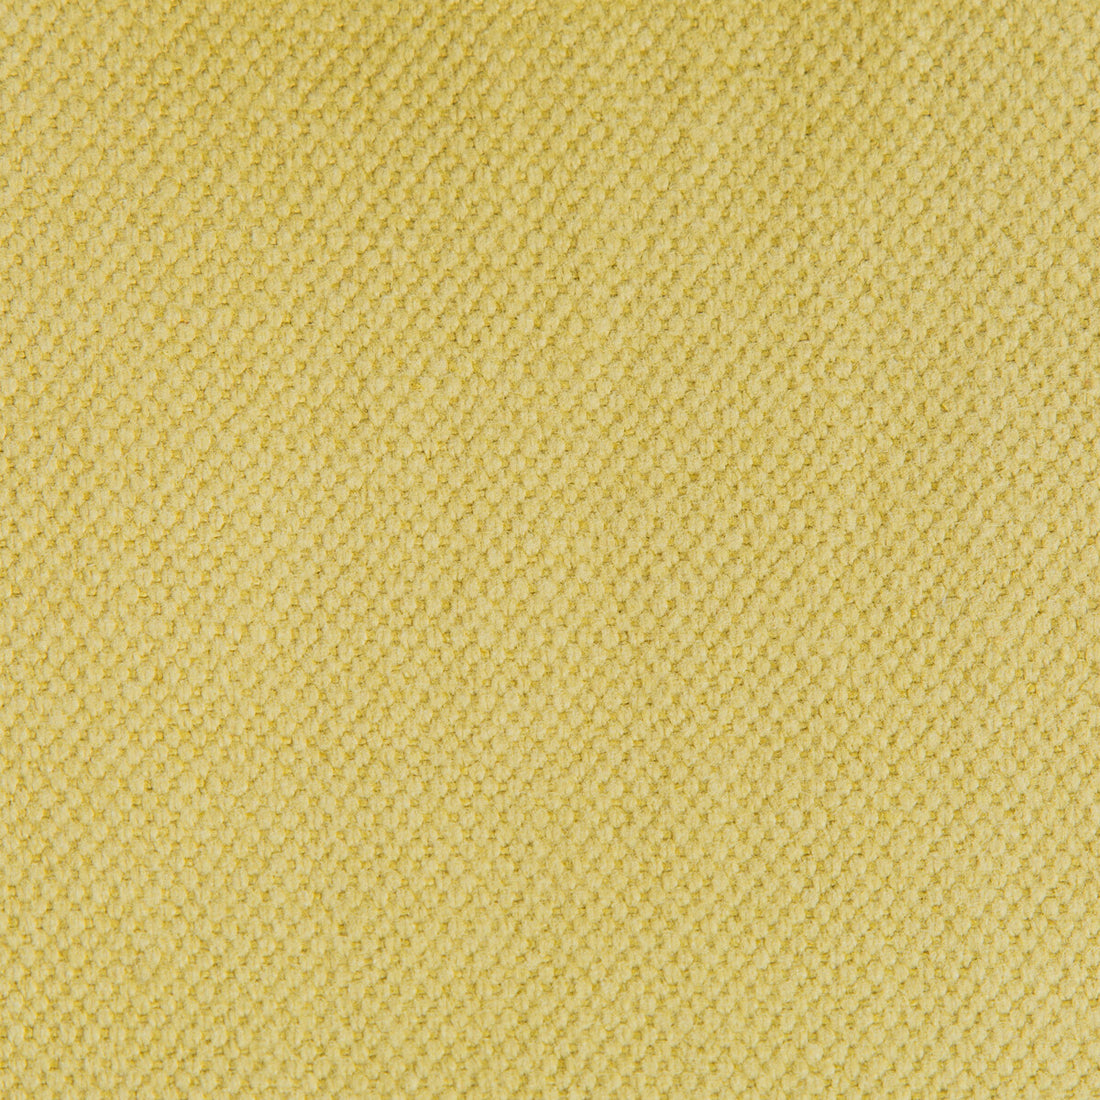 Lima fabric in trigo color - pattern GDT5616.008.0 - by Gaston y Daniela in the Gaston Nuevo Mundo collection